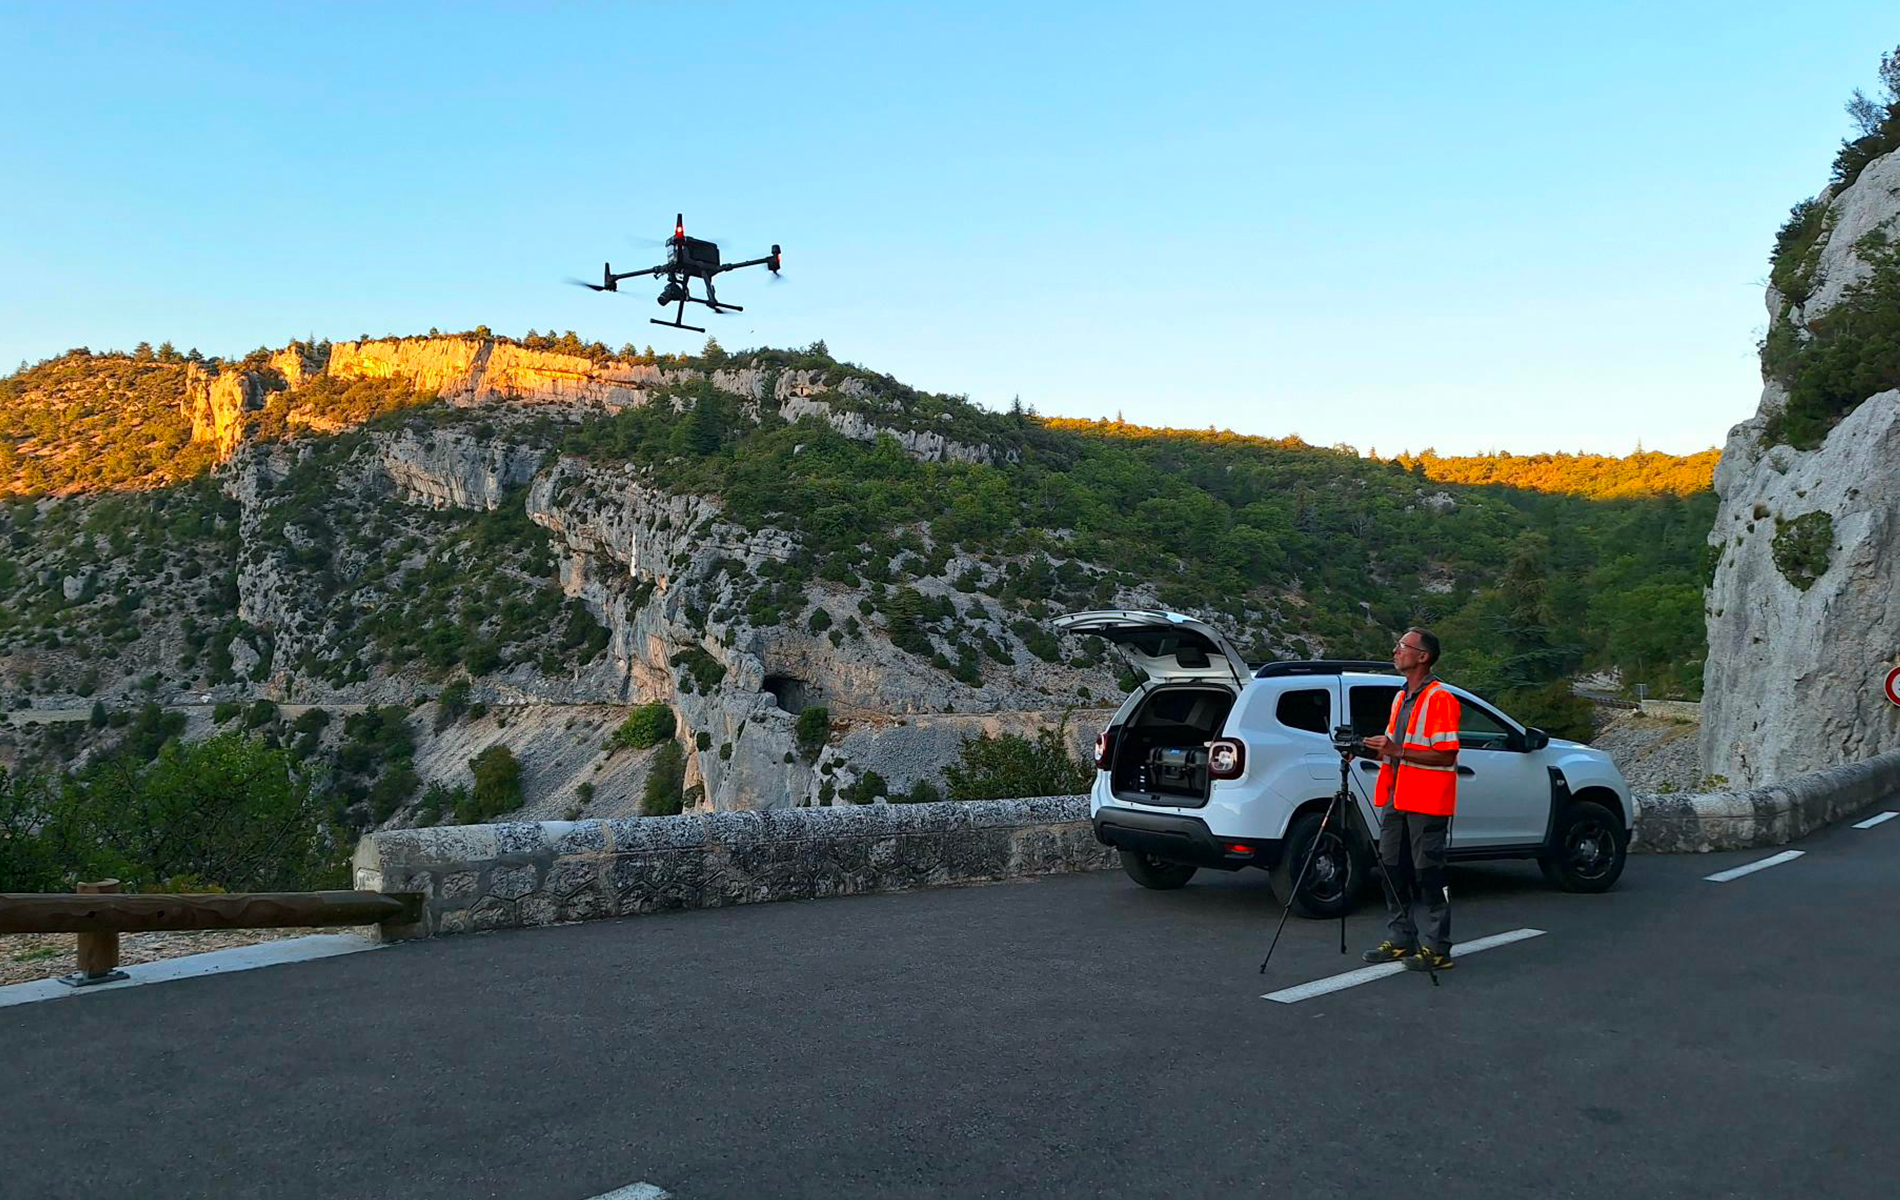 location-drone-pyrenees-orientales.